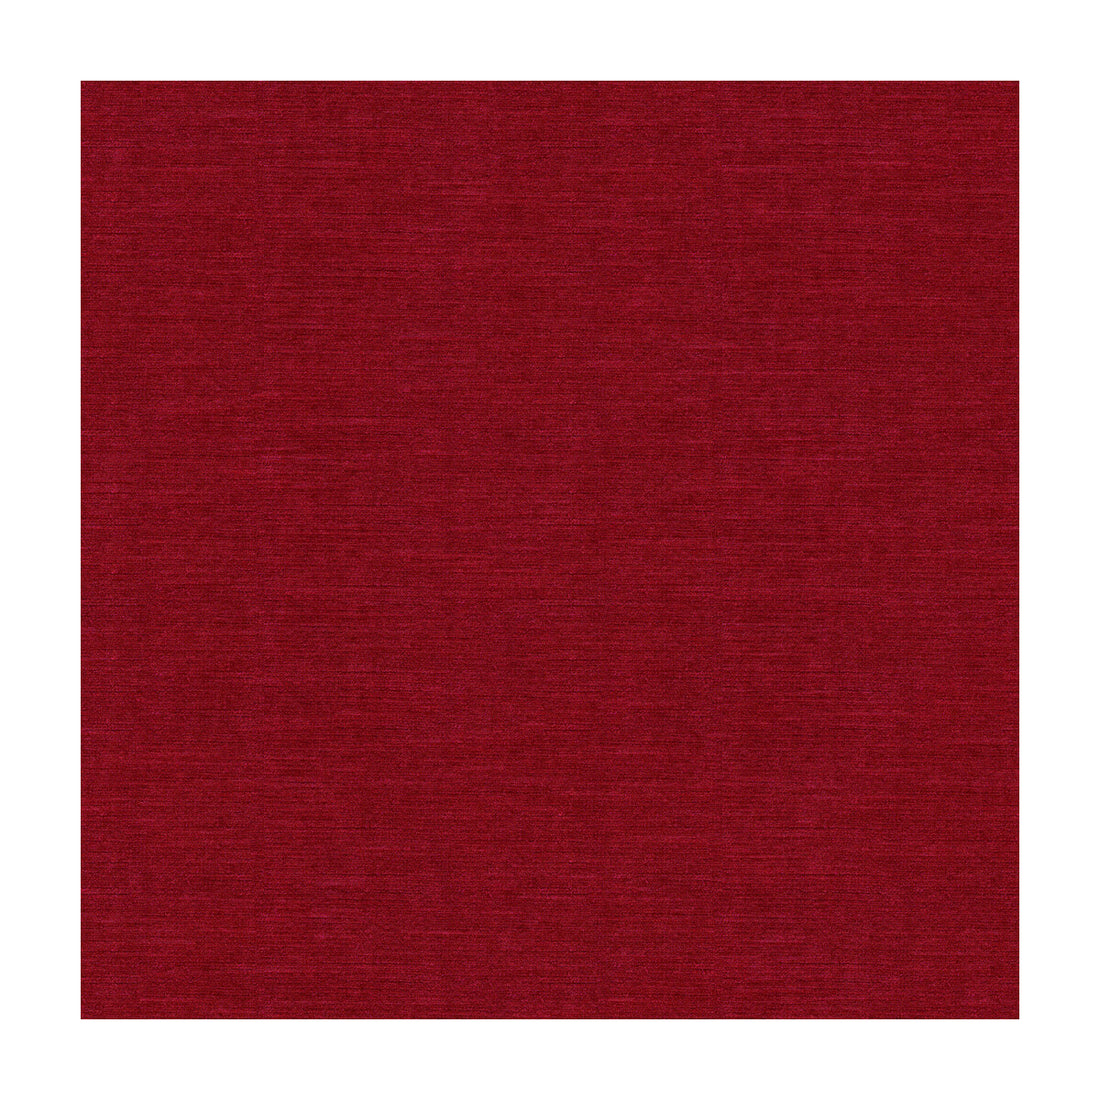 Venetian fabric in pompeii color - pattern 31326.9797.0 - by Kravet Design